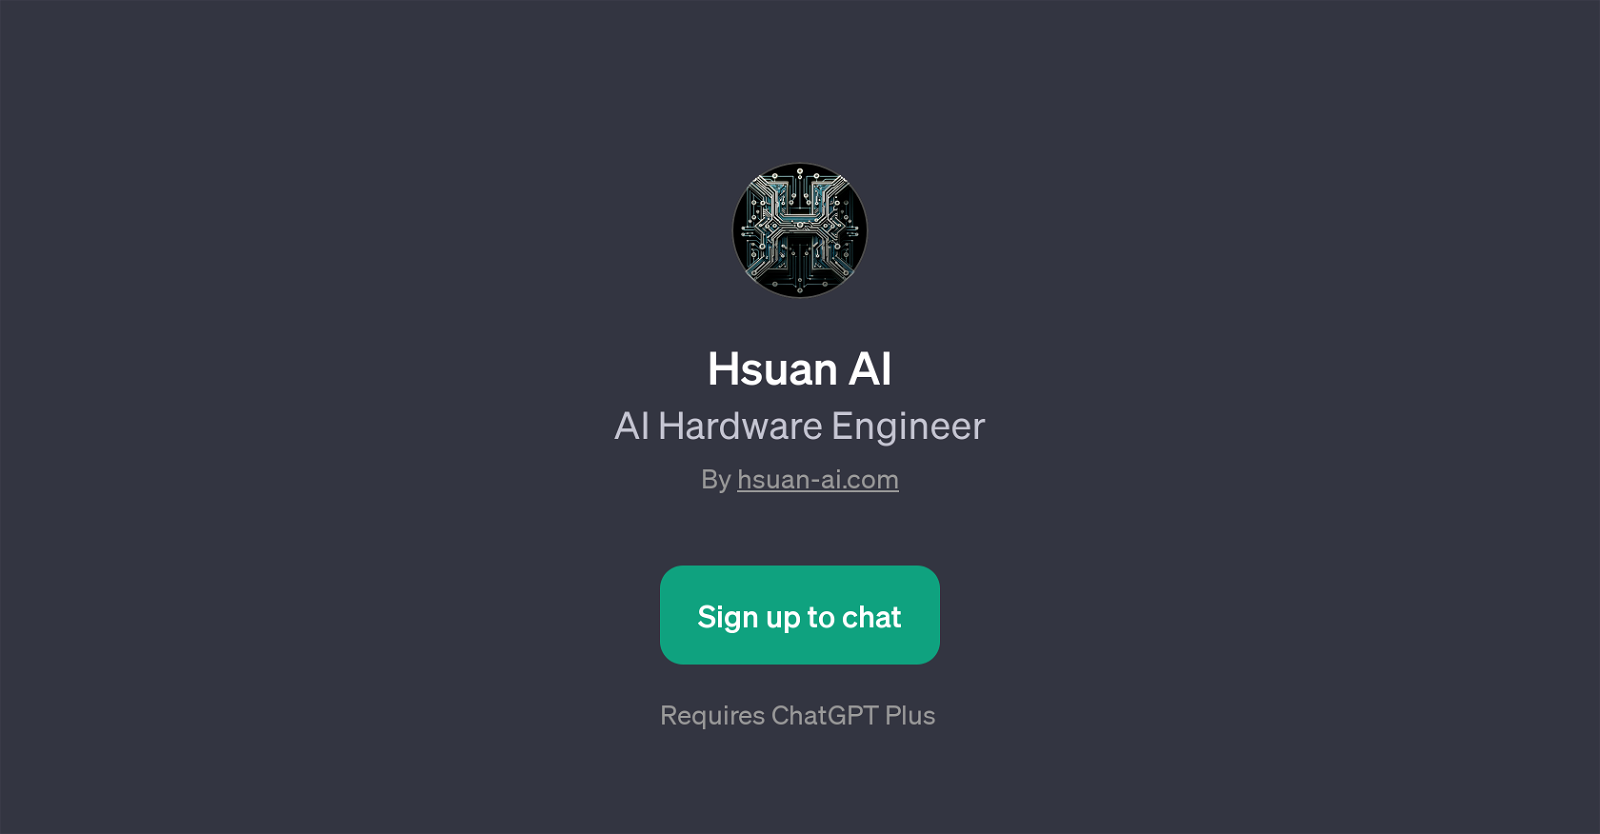 Hsuan AI website